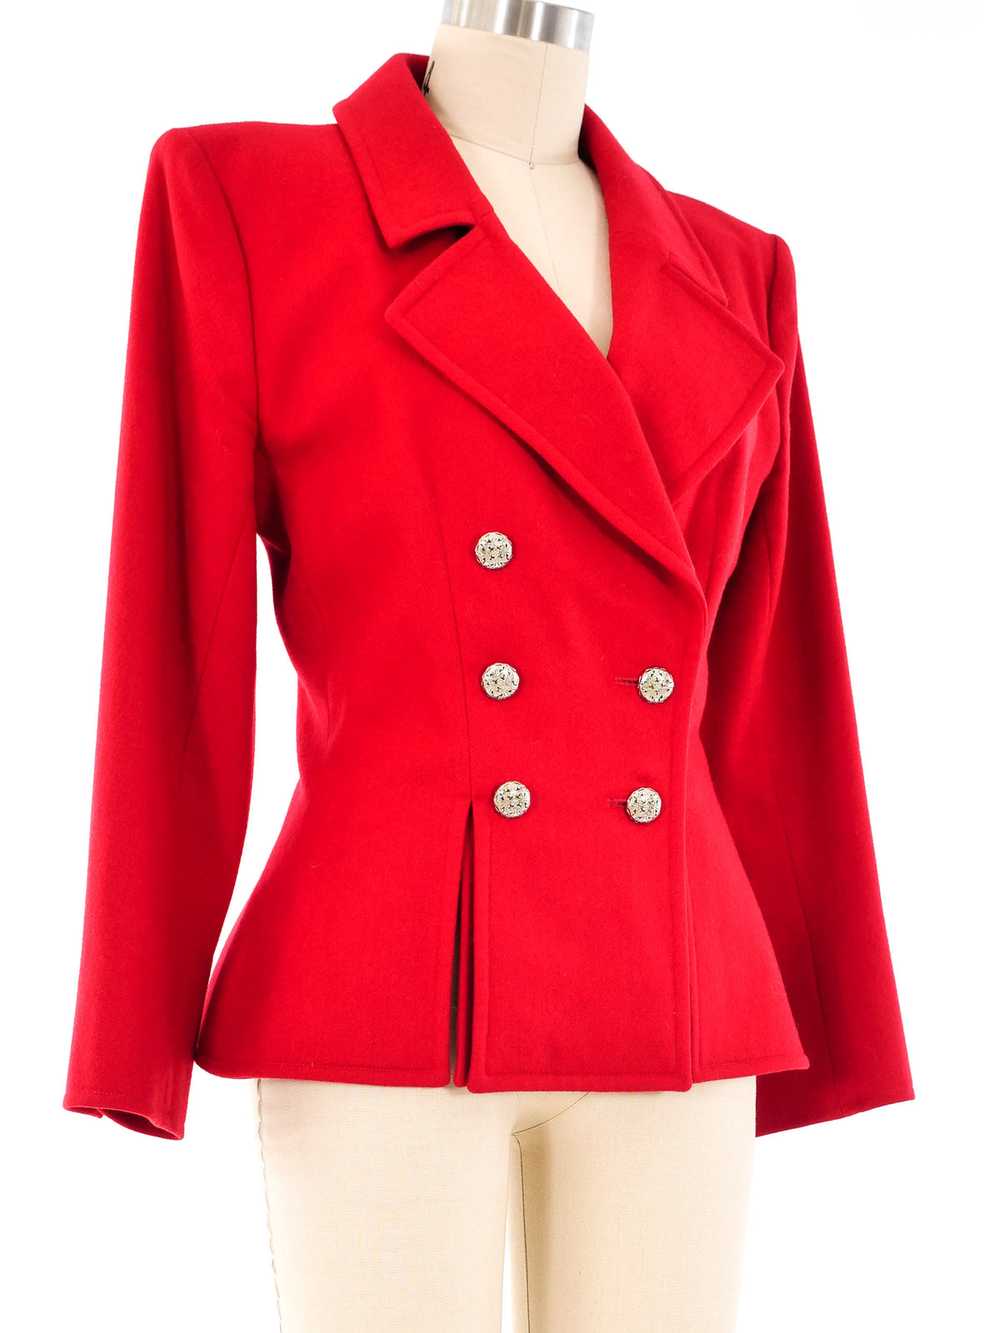 Yves Saint Laurent Red Wool Jacket - image 2